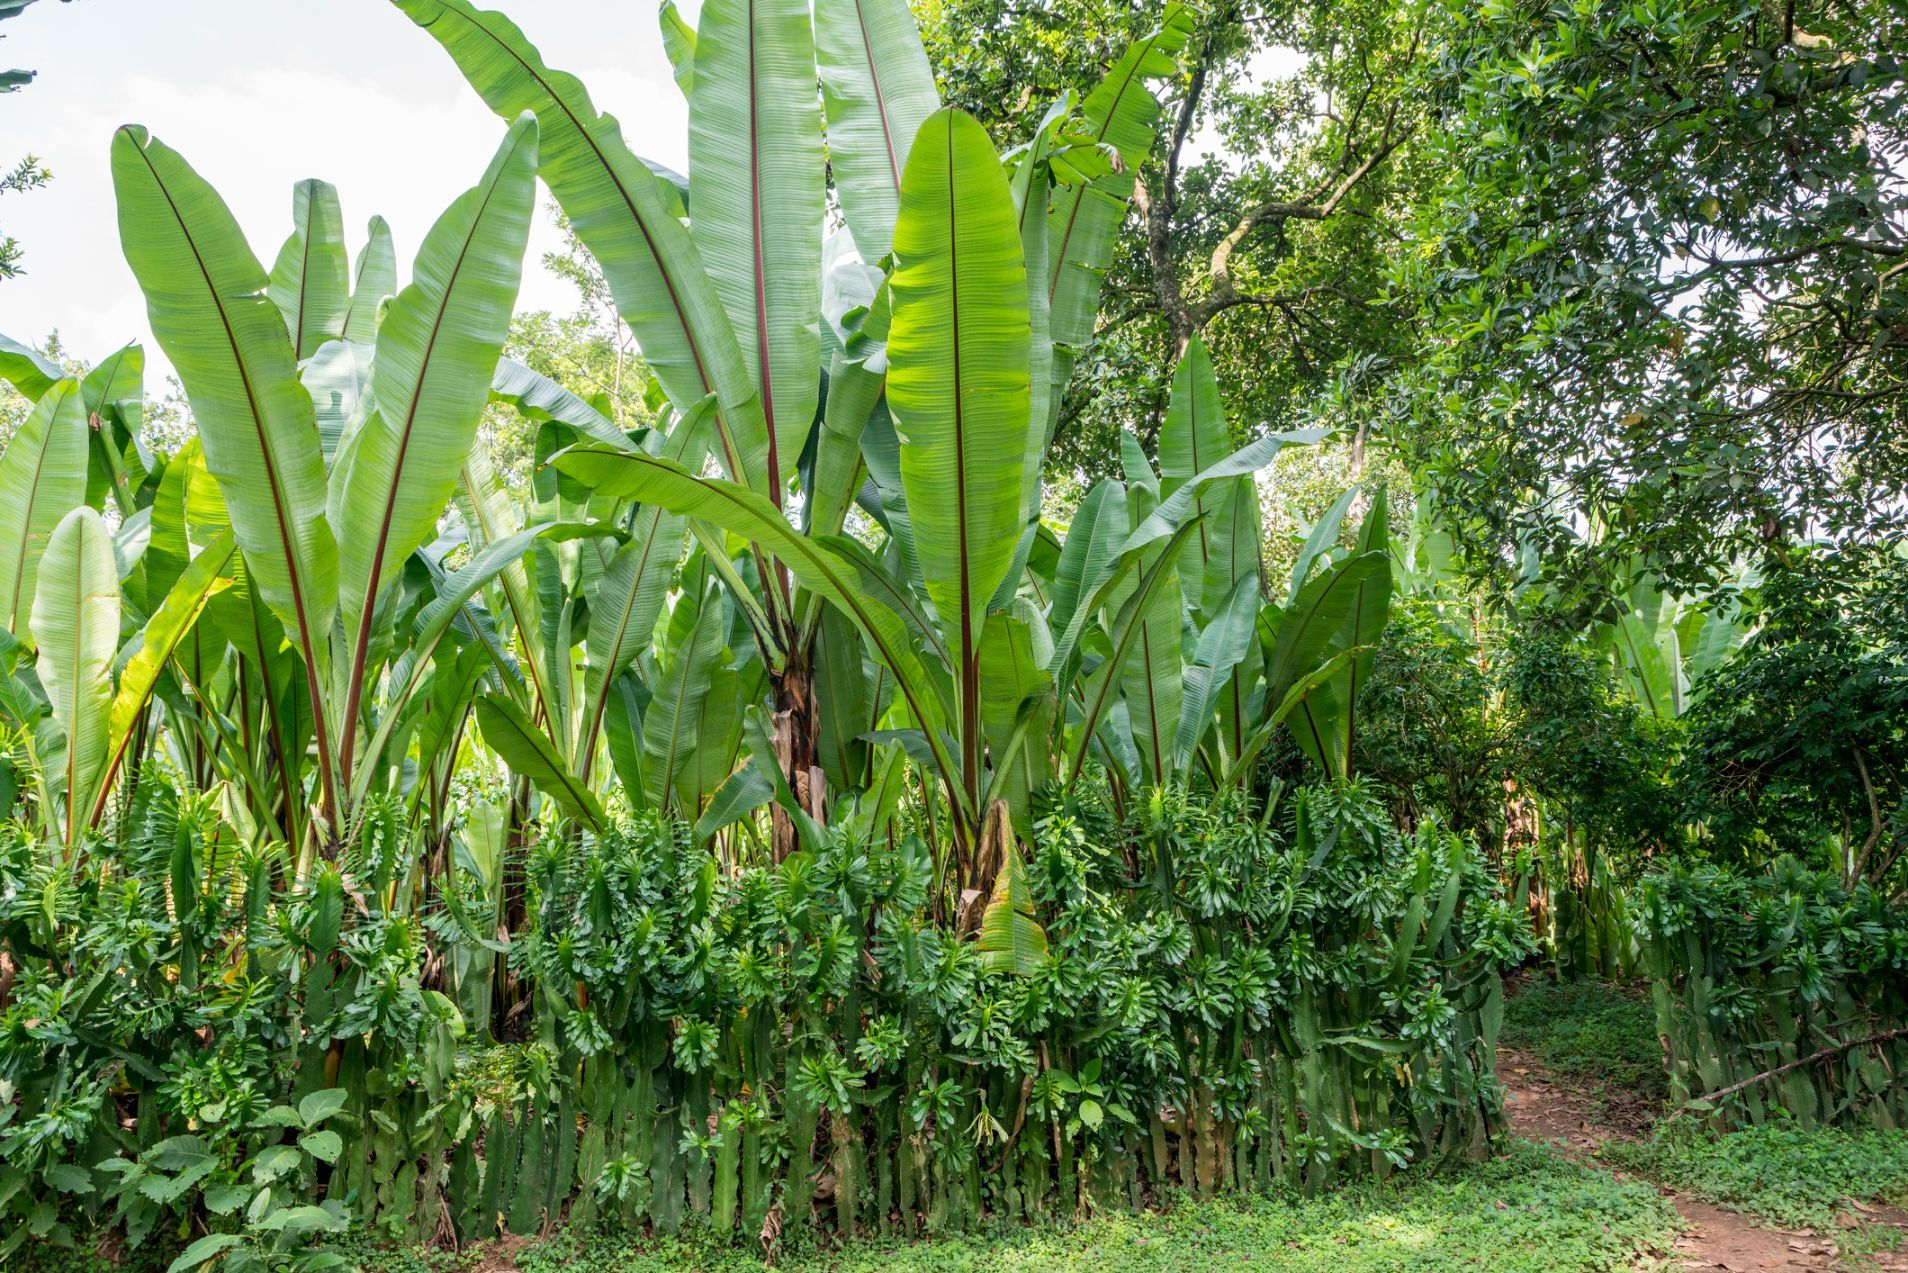 The enset plant, also known as false banana or Ethiopian banana plant, in southern Ethiopia. Photo: Getty